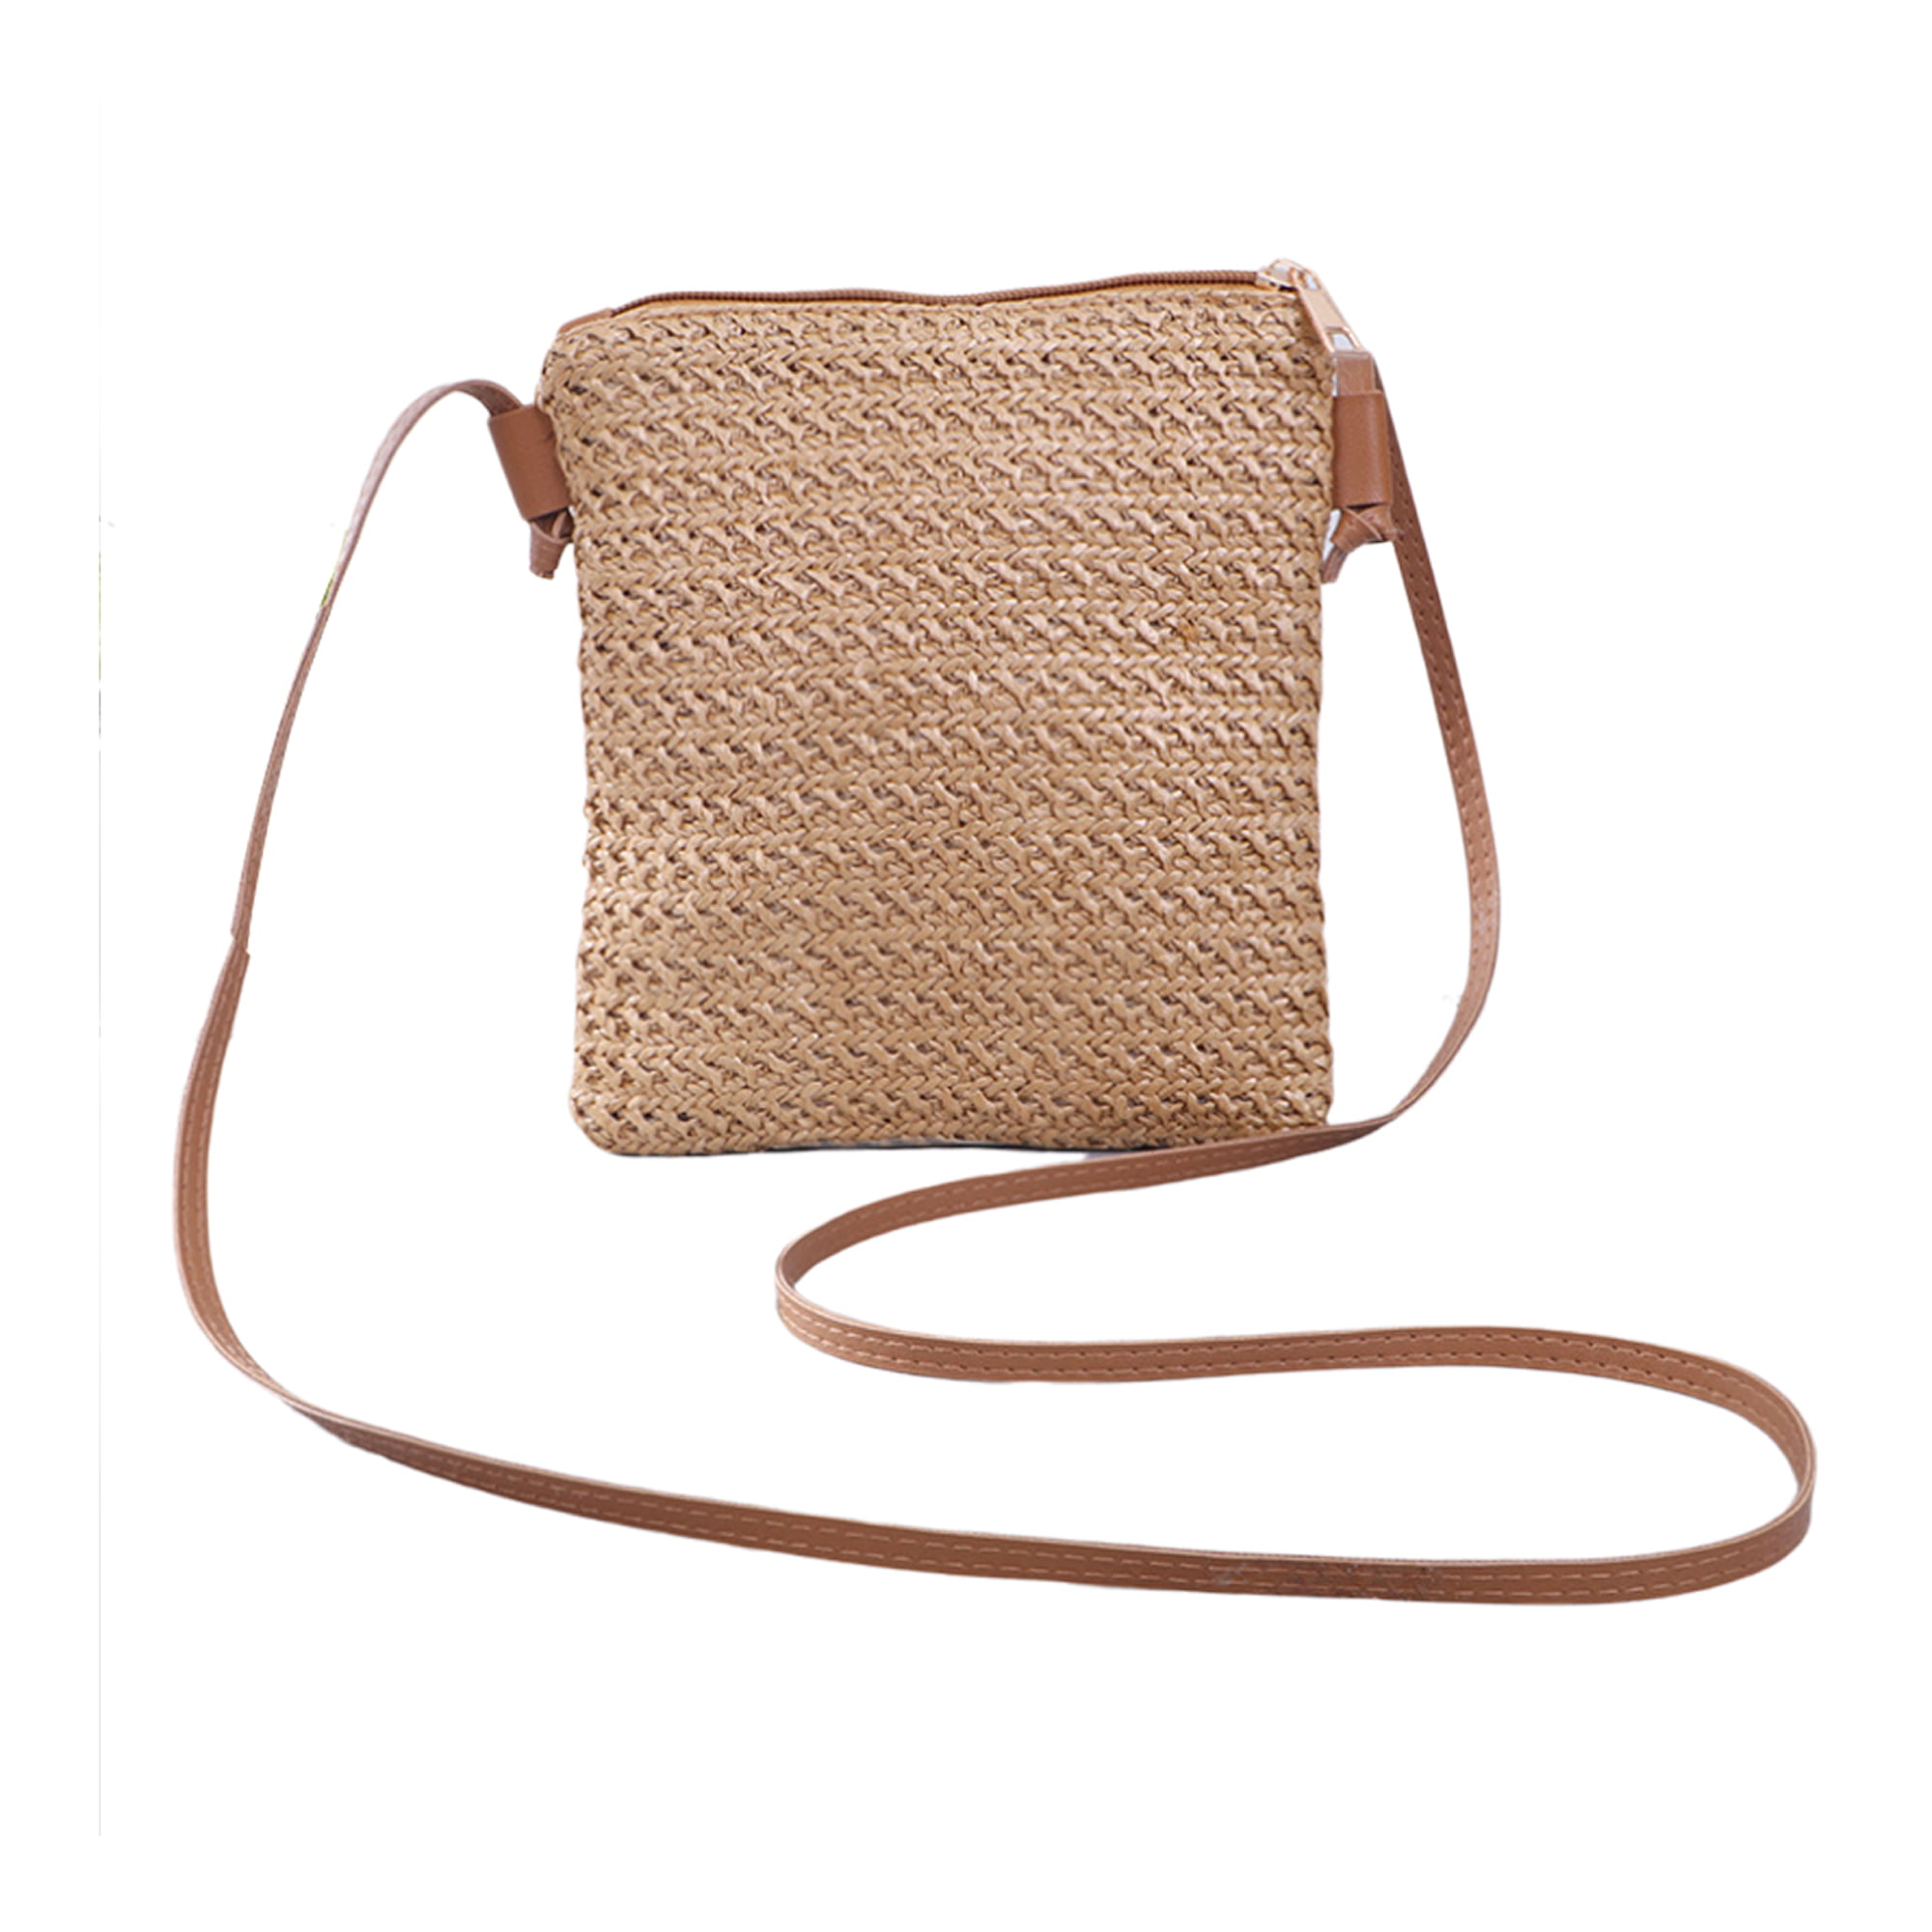 Woven Shoulder Bag Handmade Woven Leather Flap Bags Small Crossbody Bag Handbag for Women 